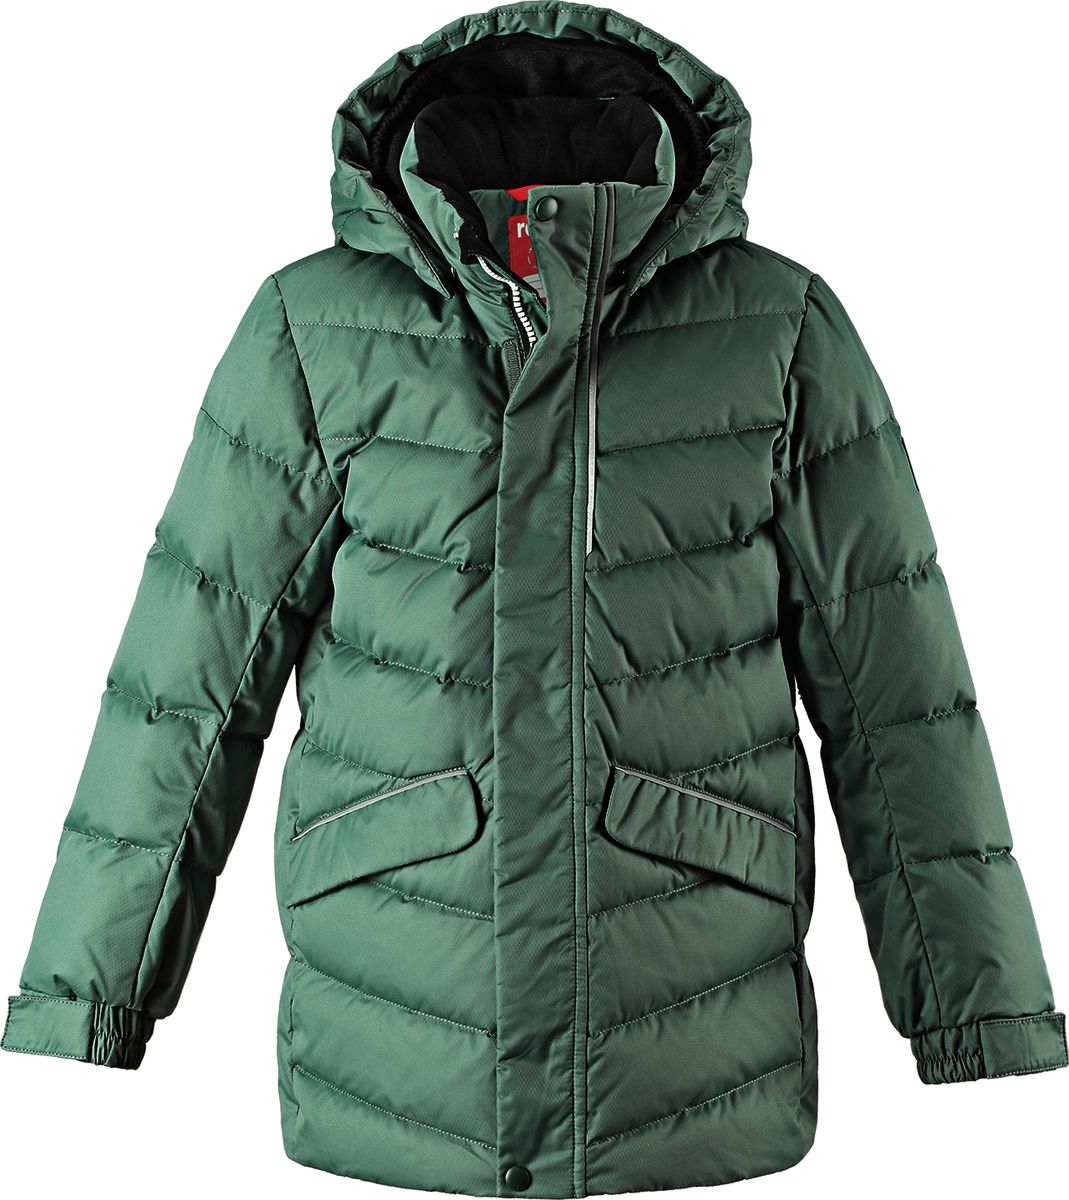 Куртка для мальчика Reima Janne, цвет: зеленый. 5313718630. Размер 128